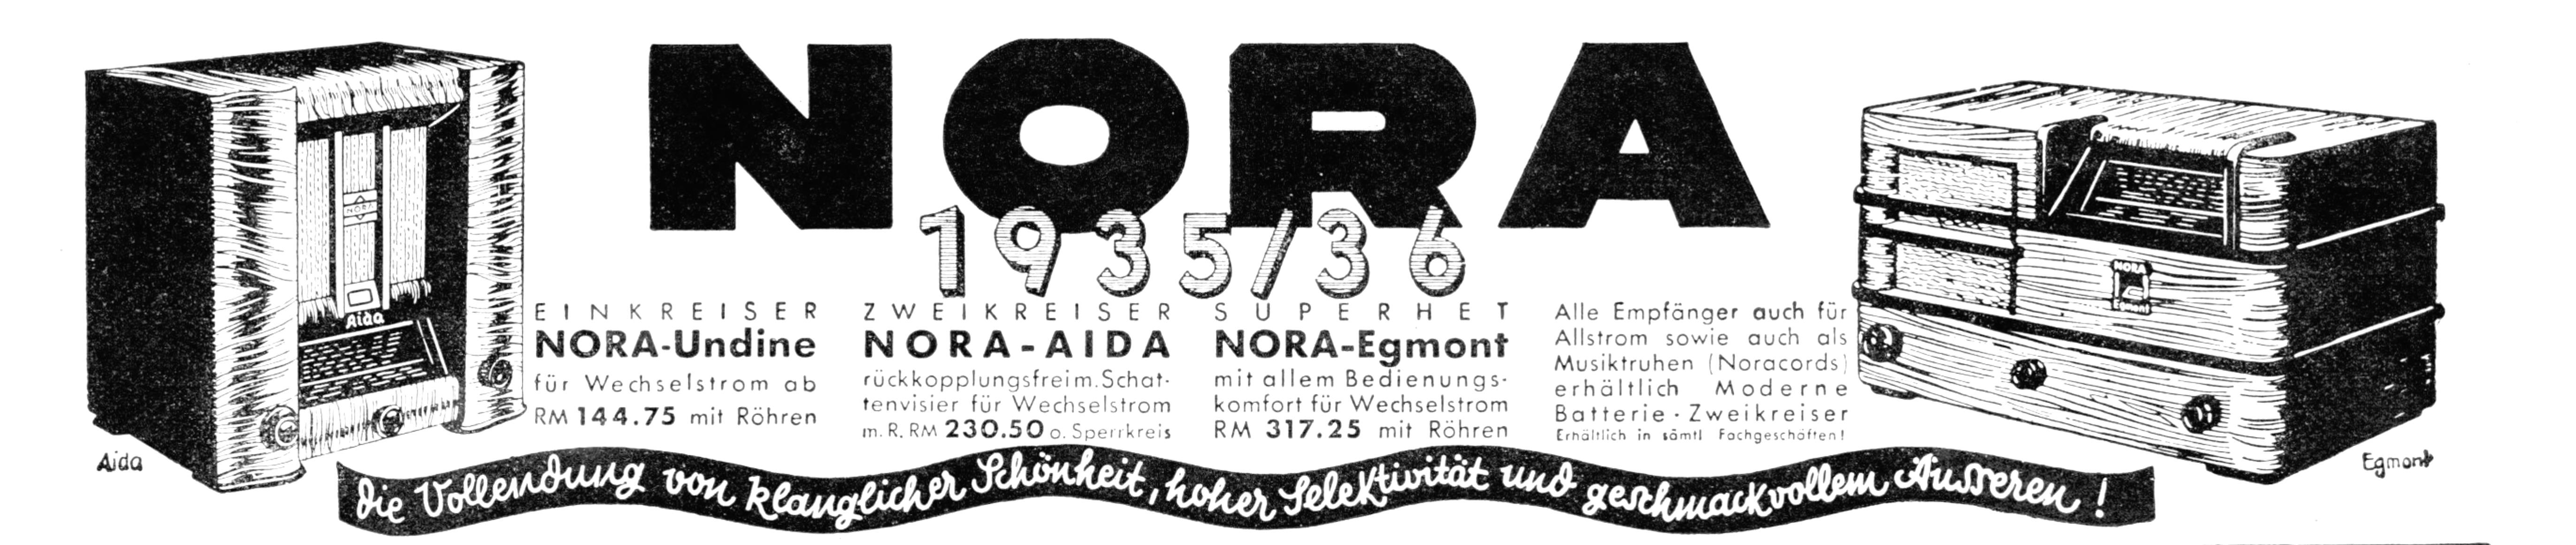 Nora 1936 893.jpg